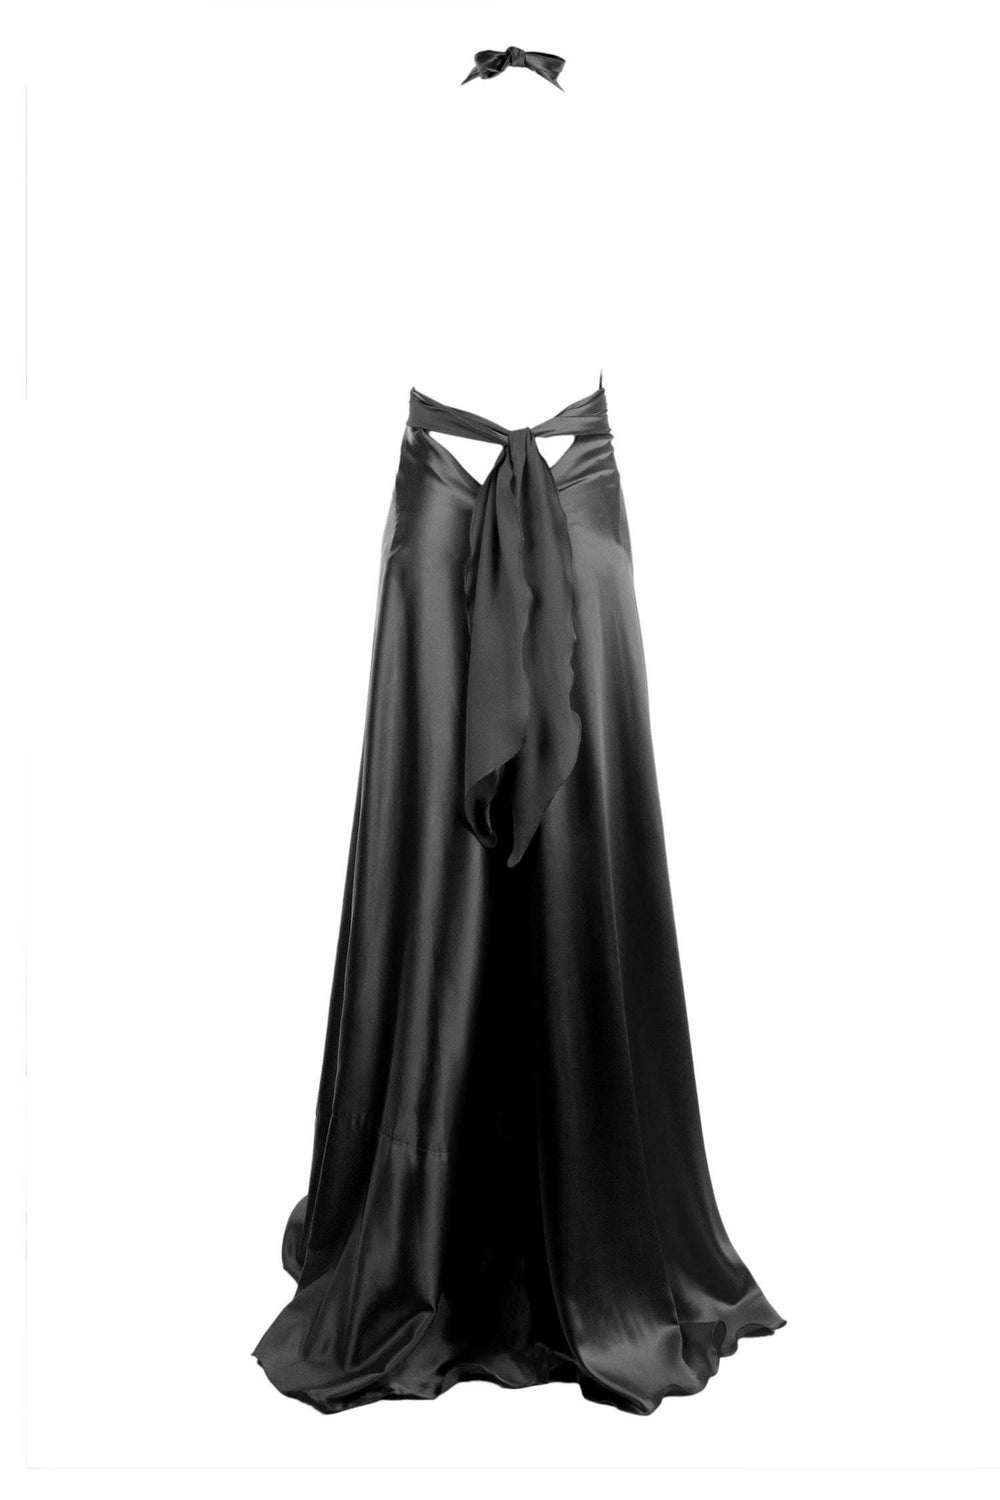 Vixen Gown in Black Dresses Lucy Laurita - Leiela 